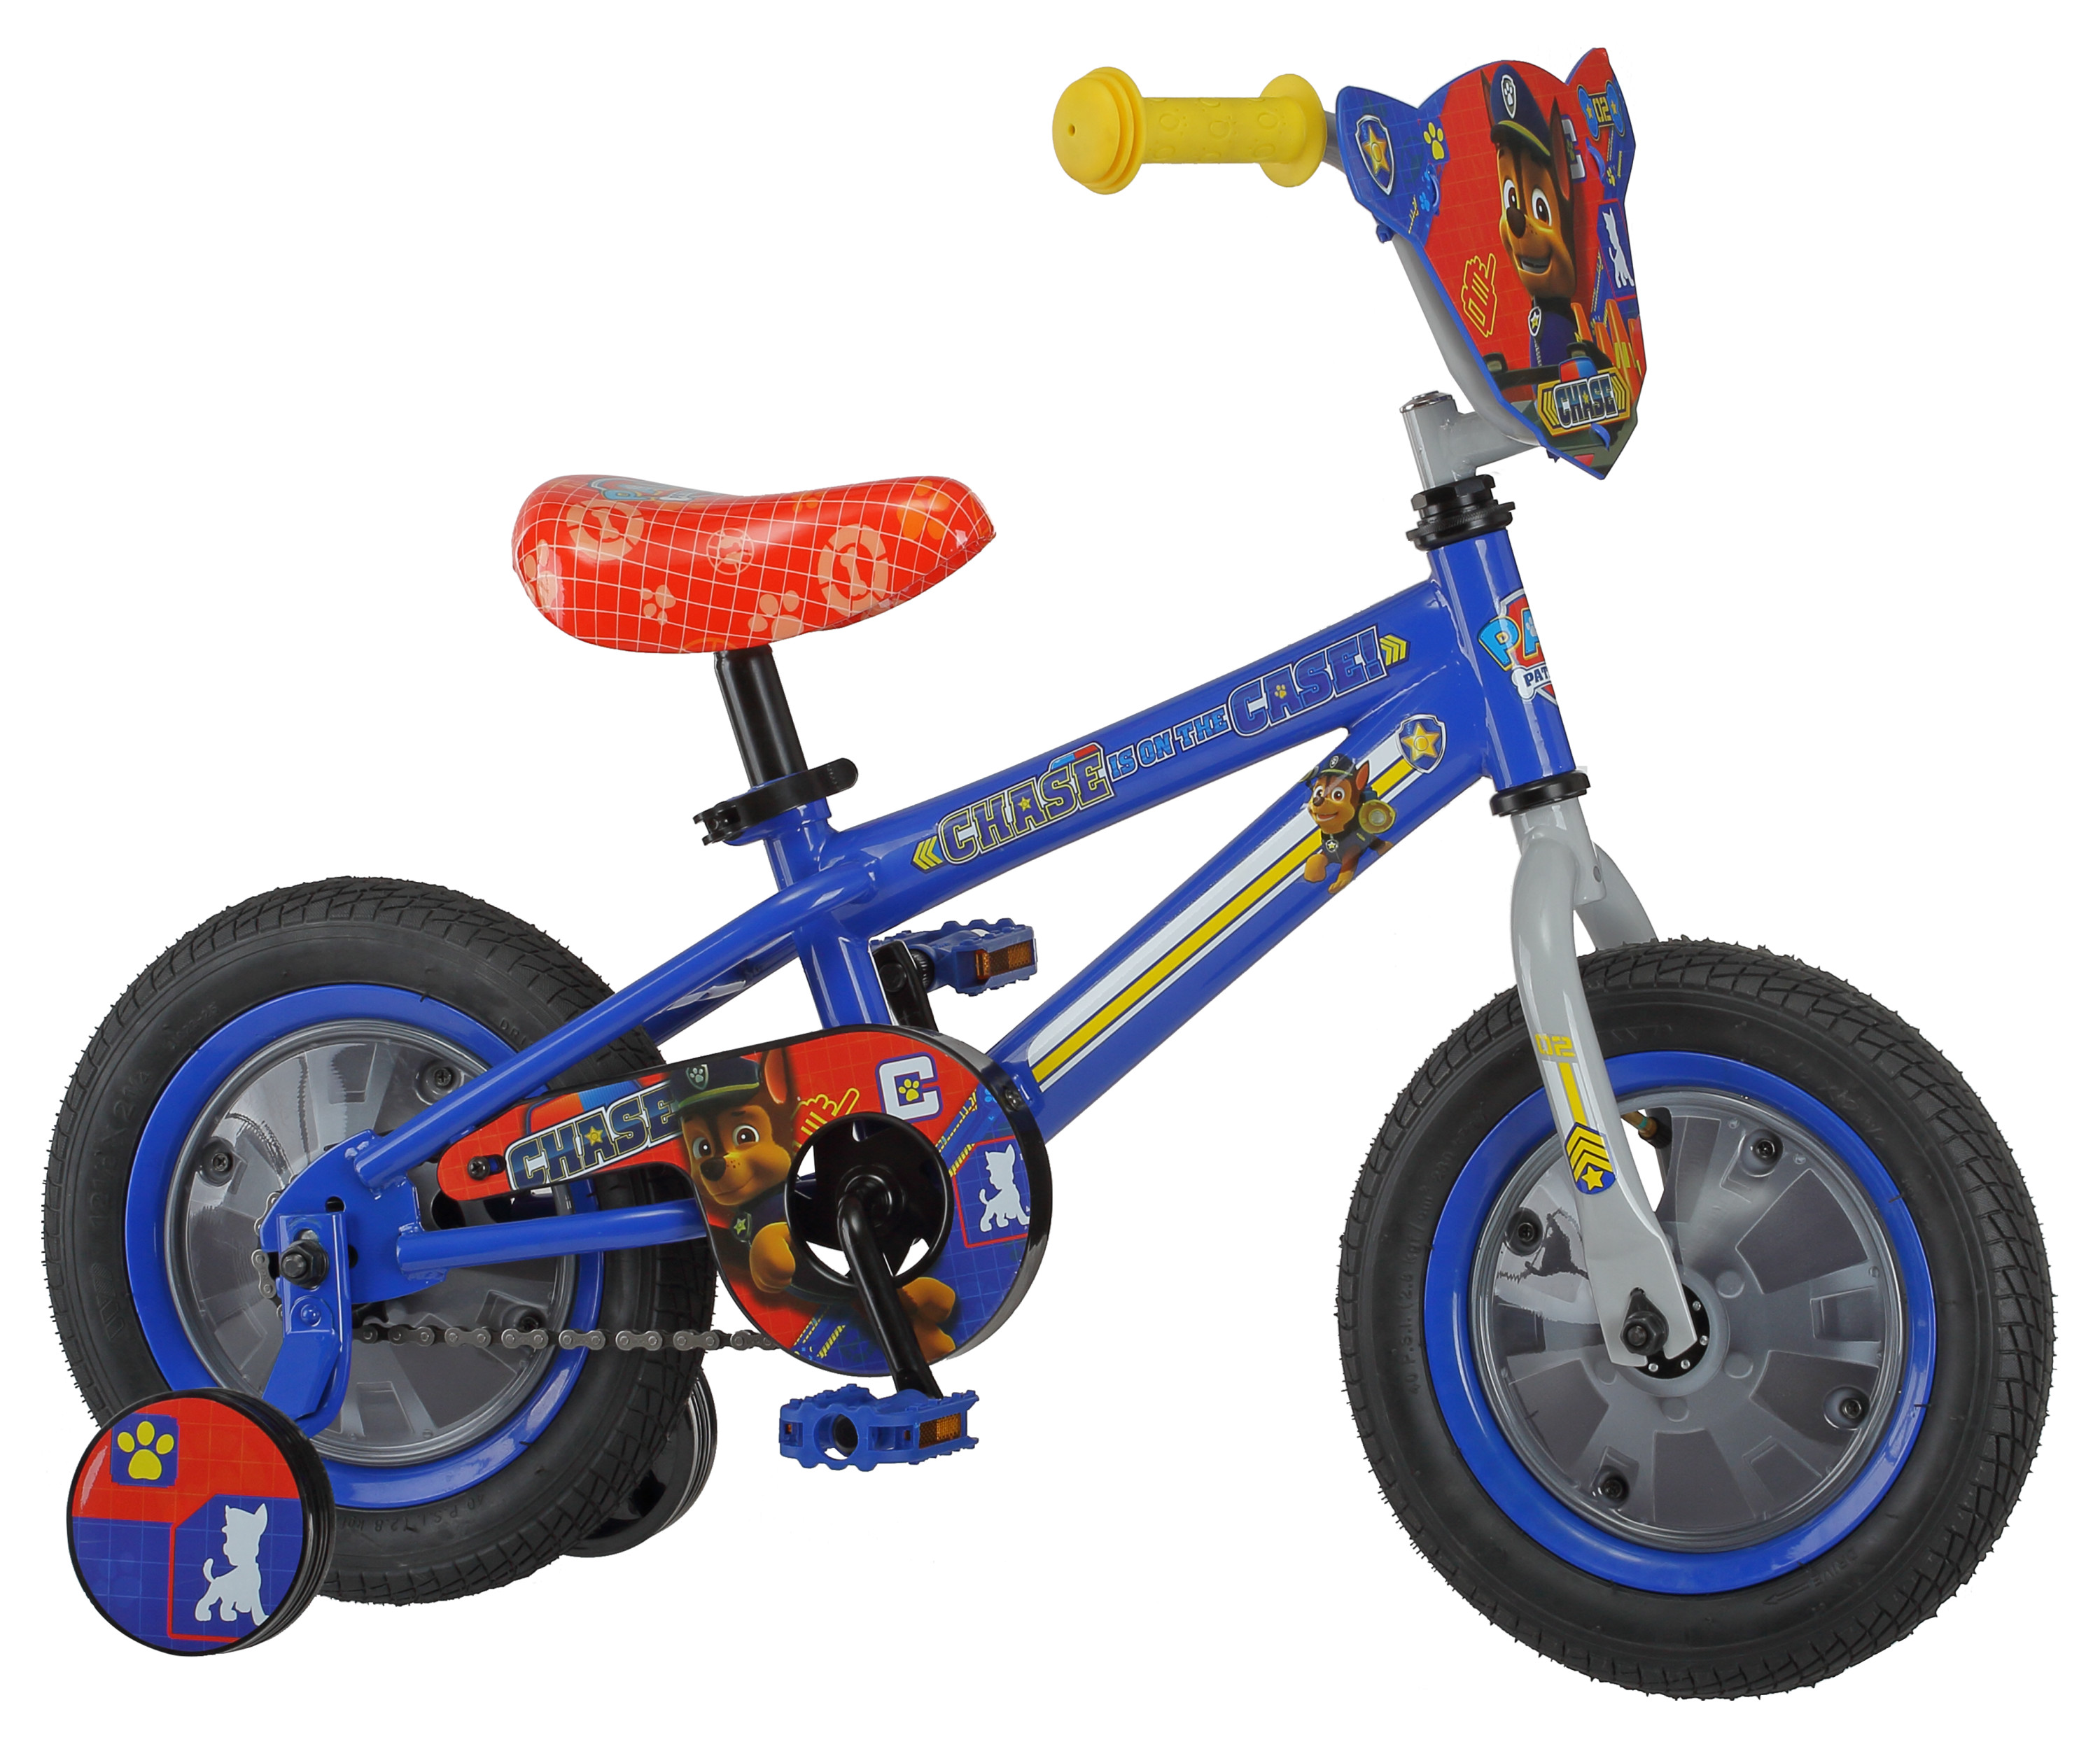 Nickelodeon's PAW Patrol: Chase Sidewalk Bike, 12-inch wheels, ages 2 - 4, blue - image 4 of 8